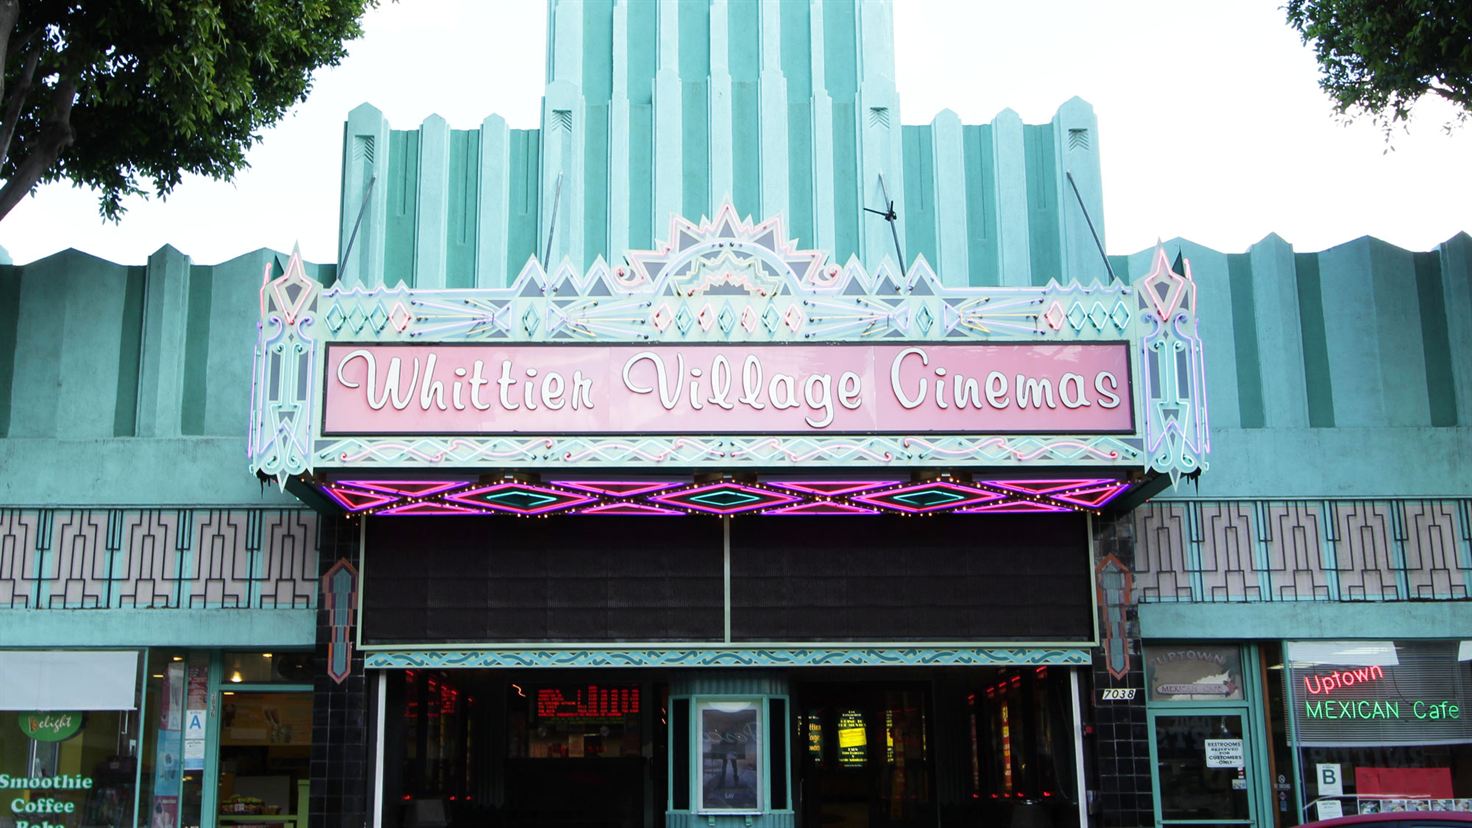 Our Locations Starlight Whittier Village Cinemas Starlight Cinemas